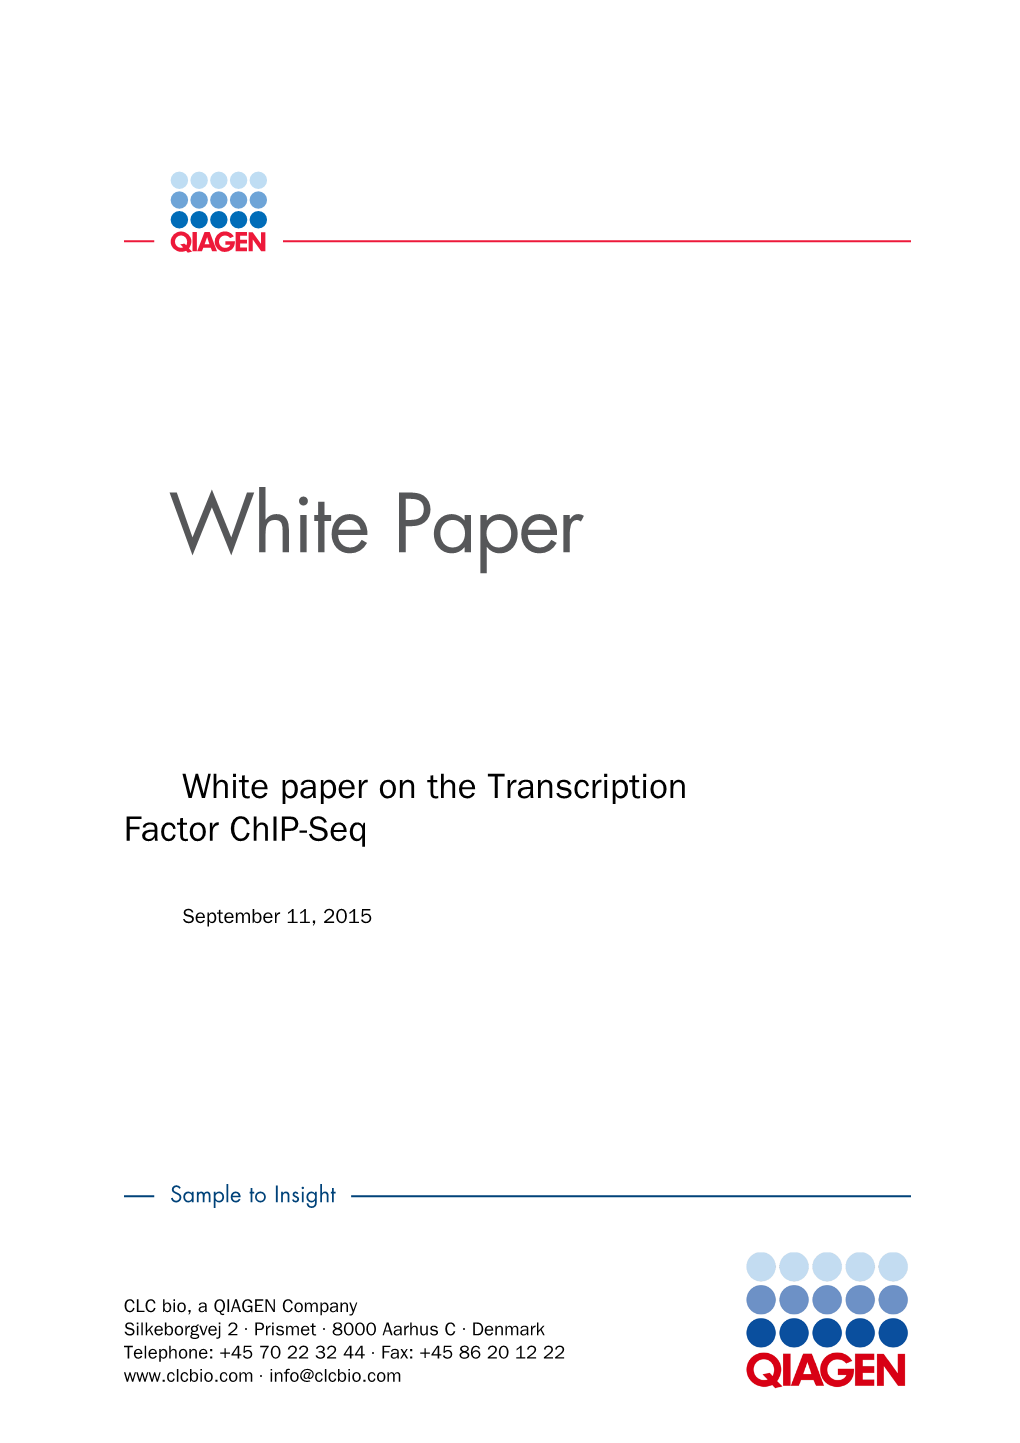 White Paper on the Transcription Factor Chip-Seq